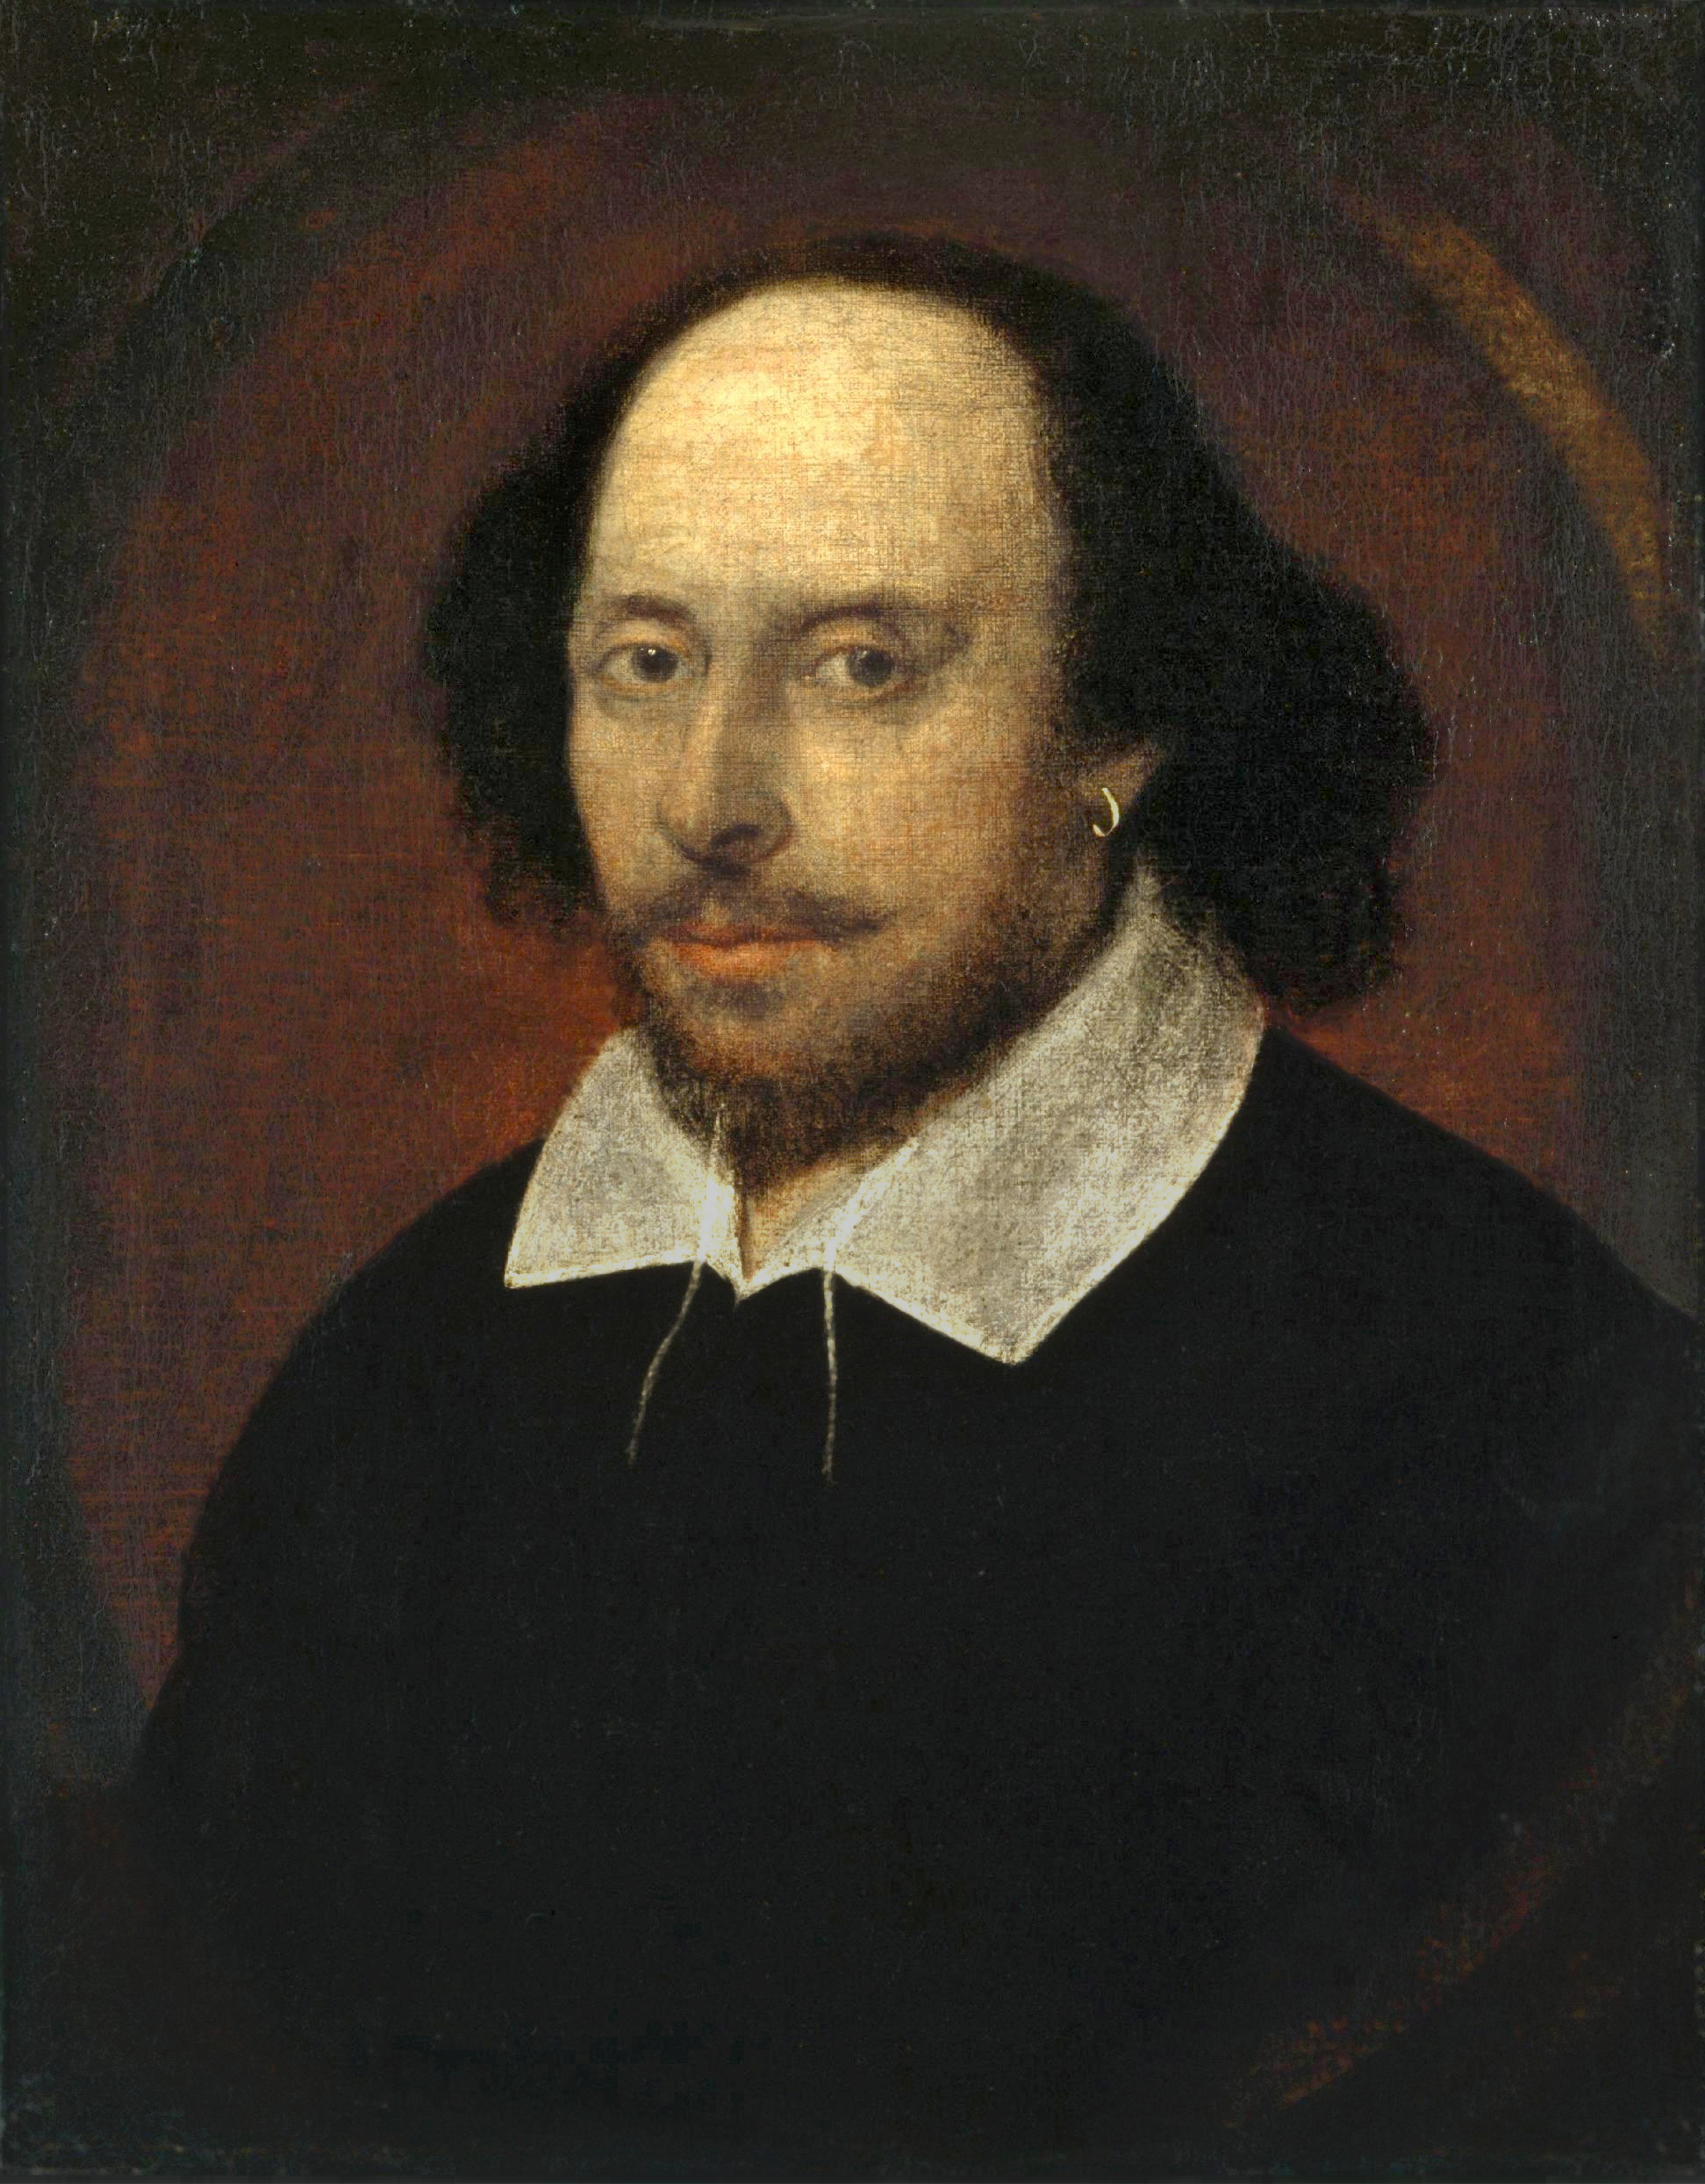 Retrato de William Shakespeare - Crédito: John Taylor/ Domínio Público / Wikimedia Commons